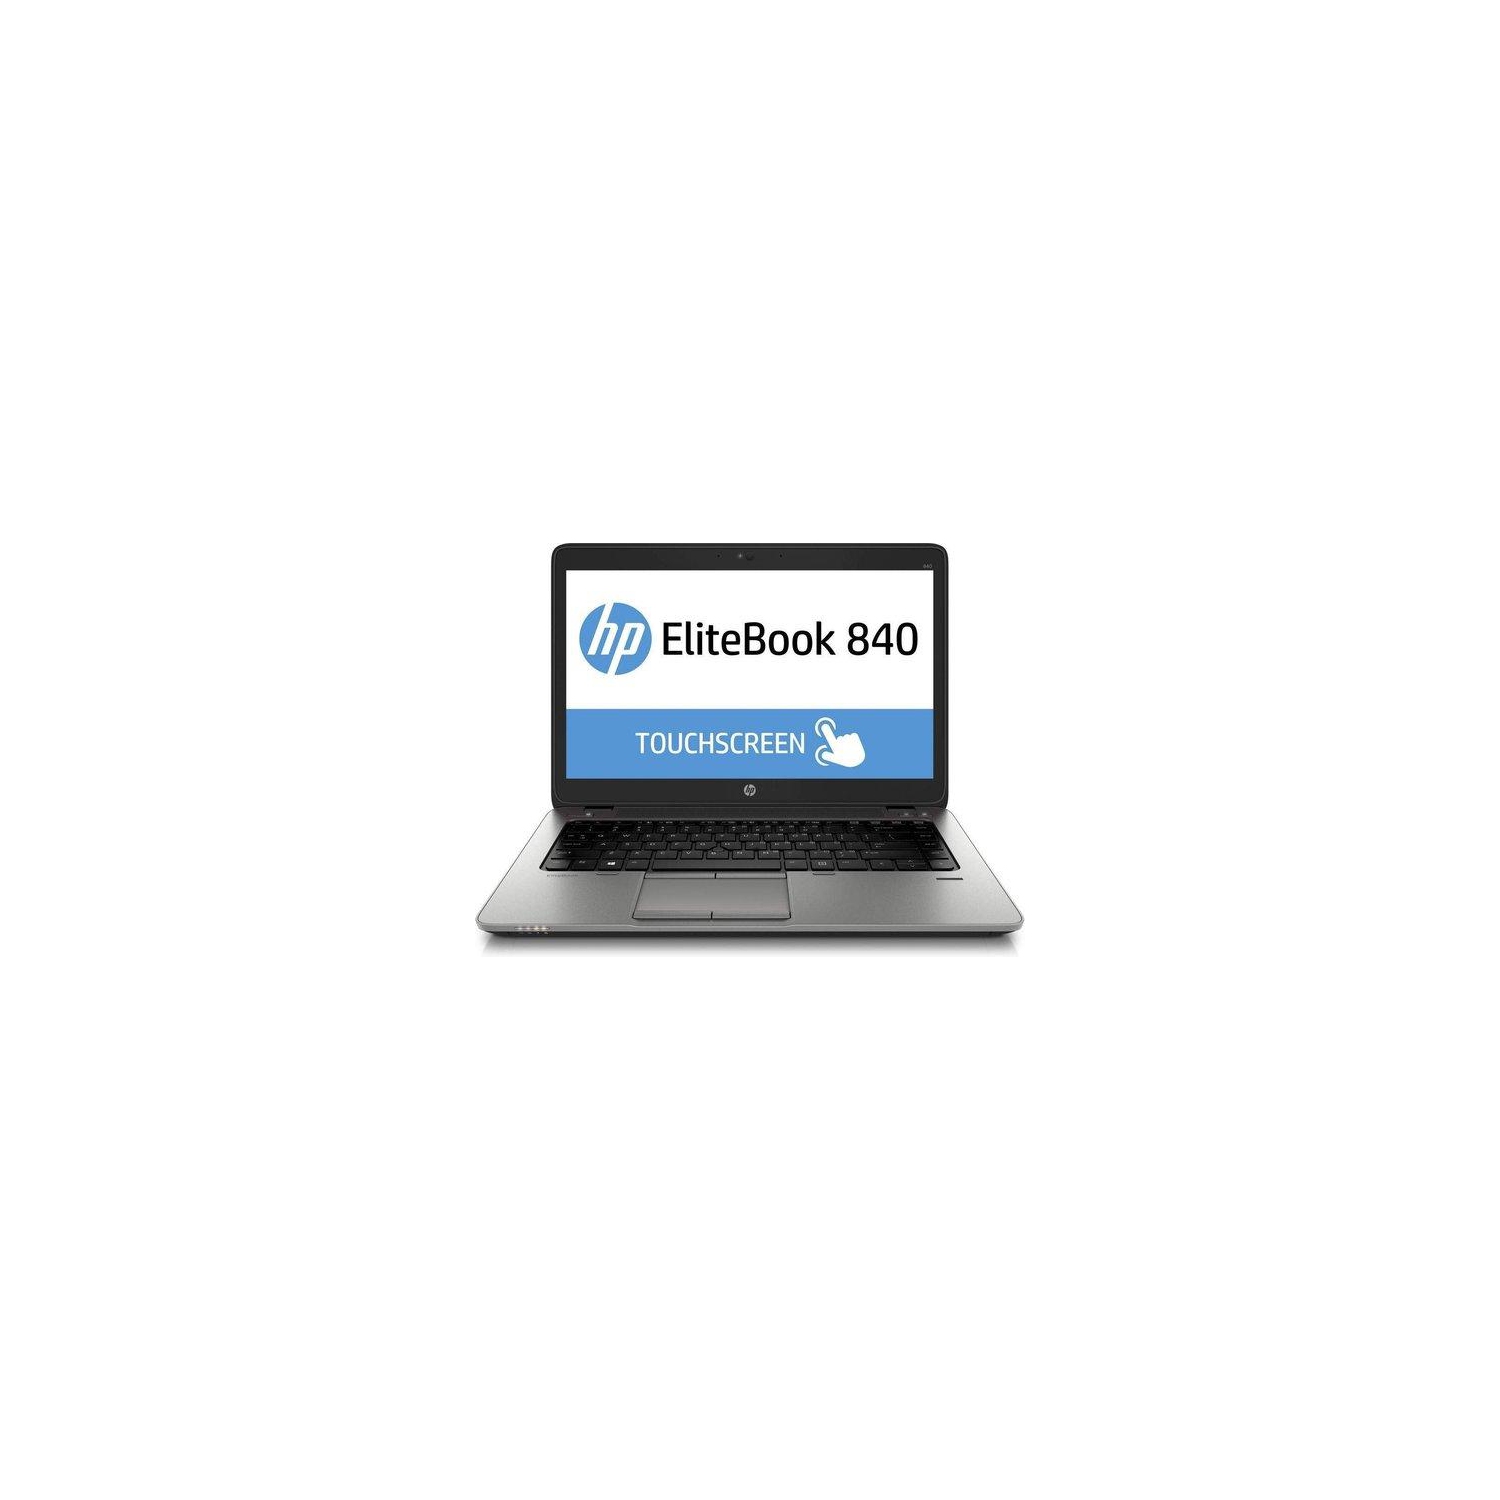 Refurbished (Good) - HP EliteBook 840 G3 14" FHD Touchscreen Business Laptop: i5-6200u 2.3GHz; 8G RAM; 256G SSD; Webcam; Backlit Keyboard, Win10 pro "â€œ